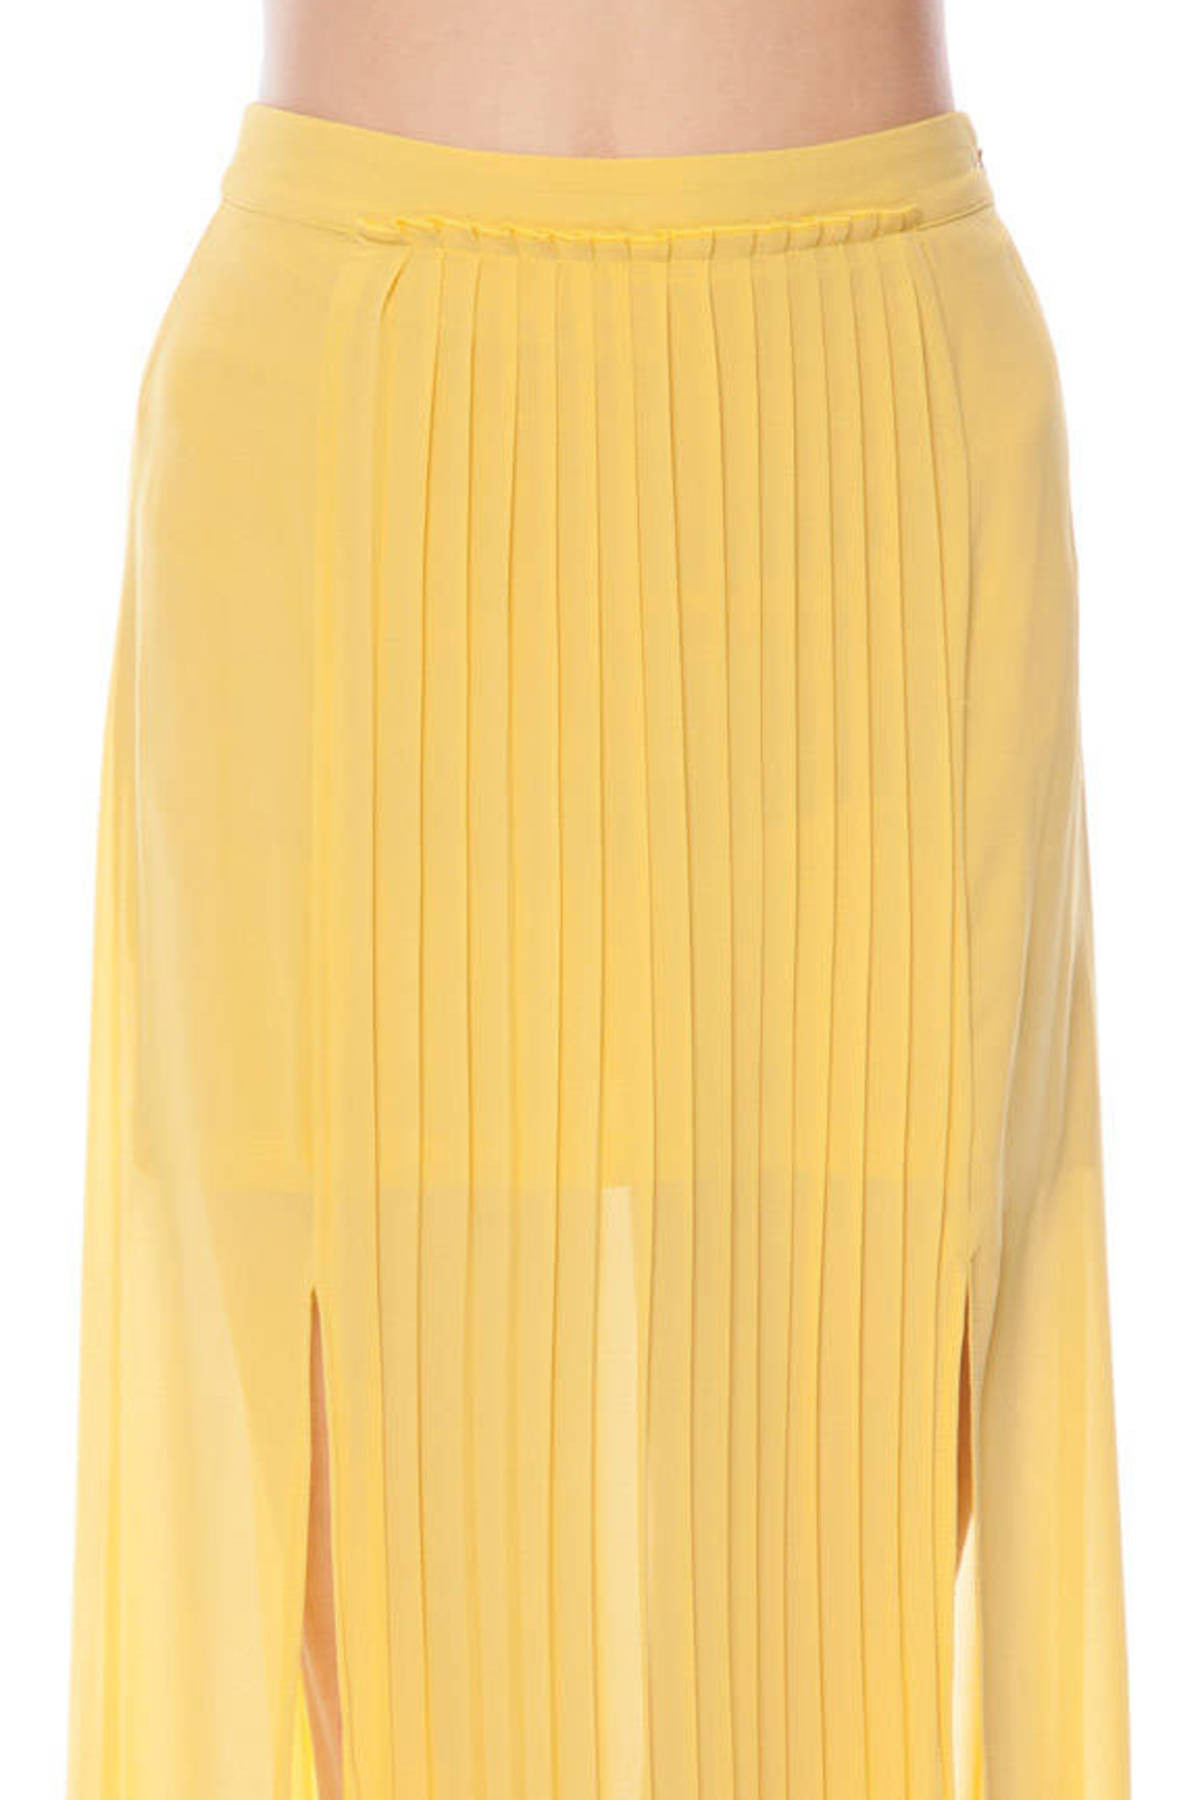 Pleated Maxi Skirt in Yellow - $20 | Tobi US